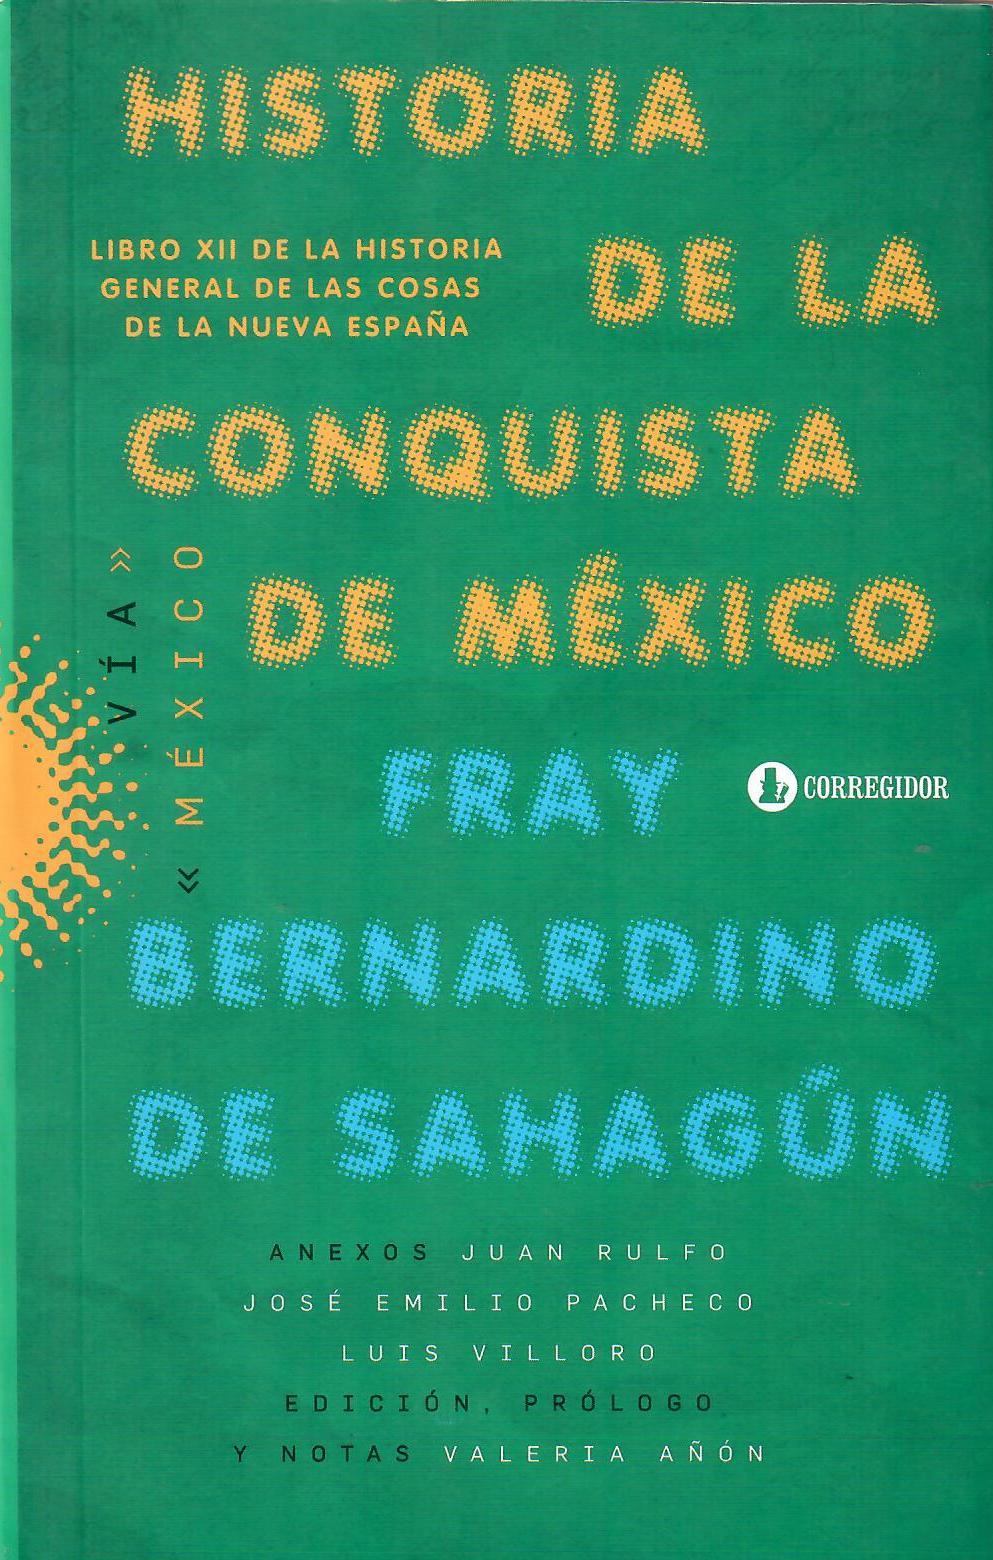 HISTORIA DE LA CONQUISTA DE MÉXICO - Fray Bernardino de Sahagún